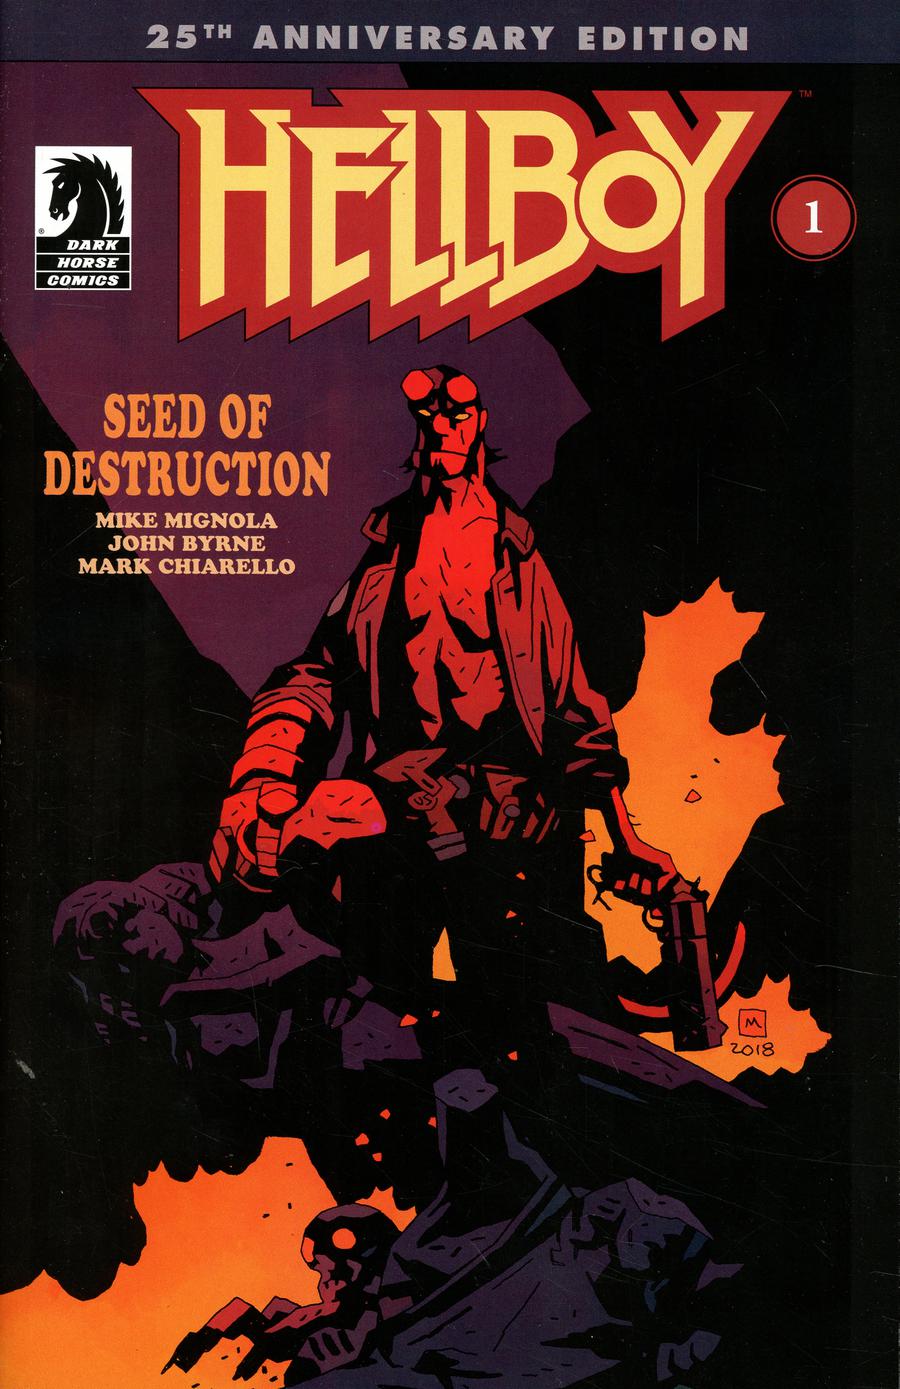 Hellboy Day 2019 Seed Of Destruction